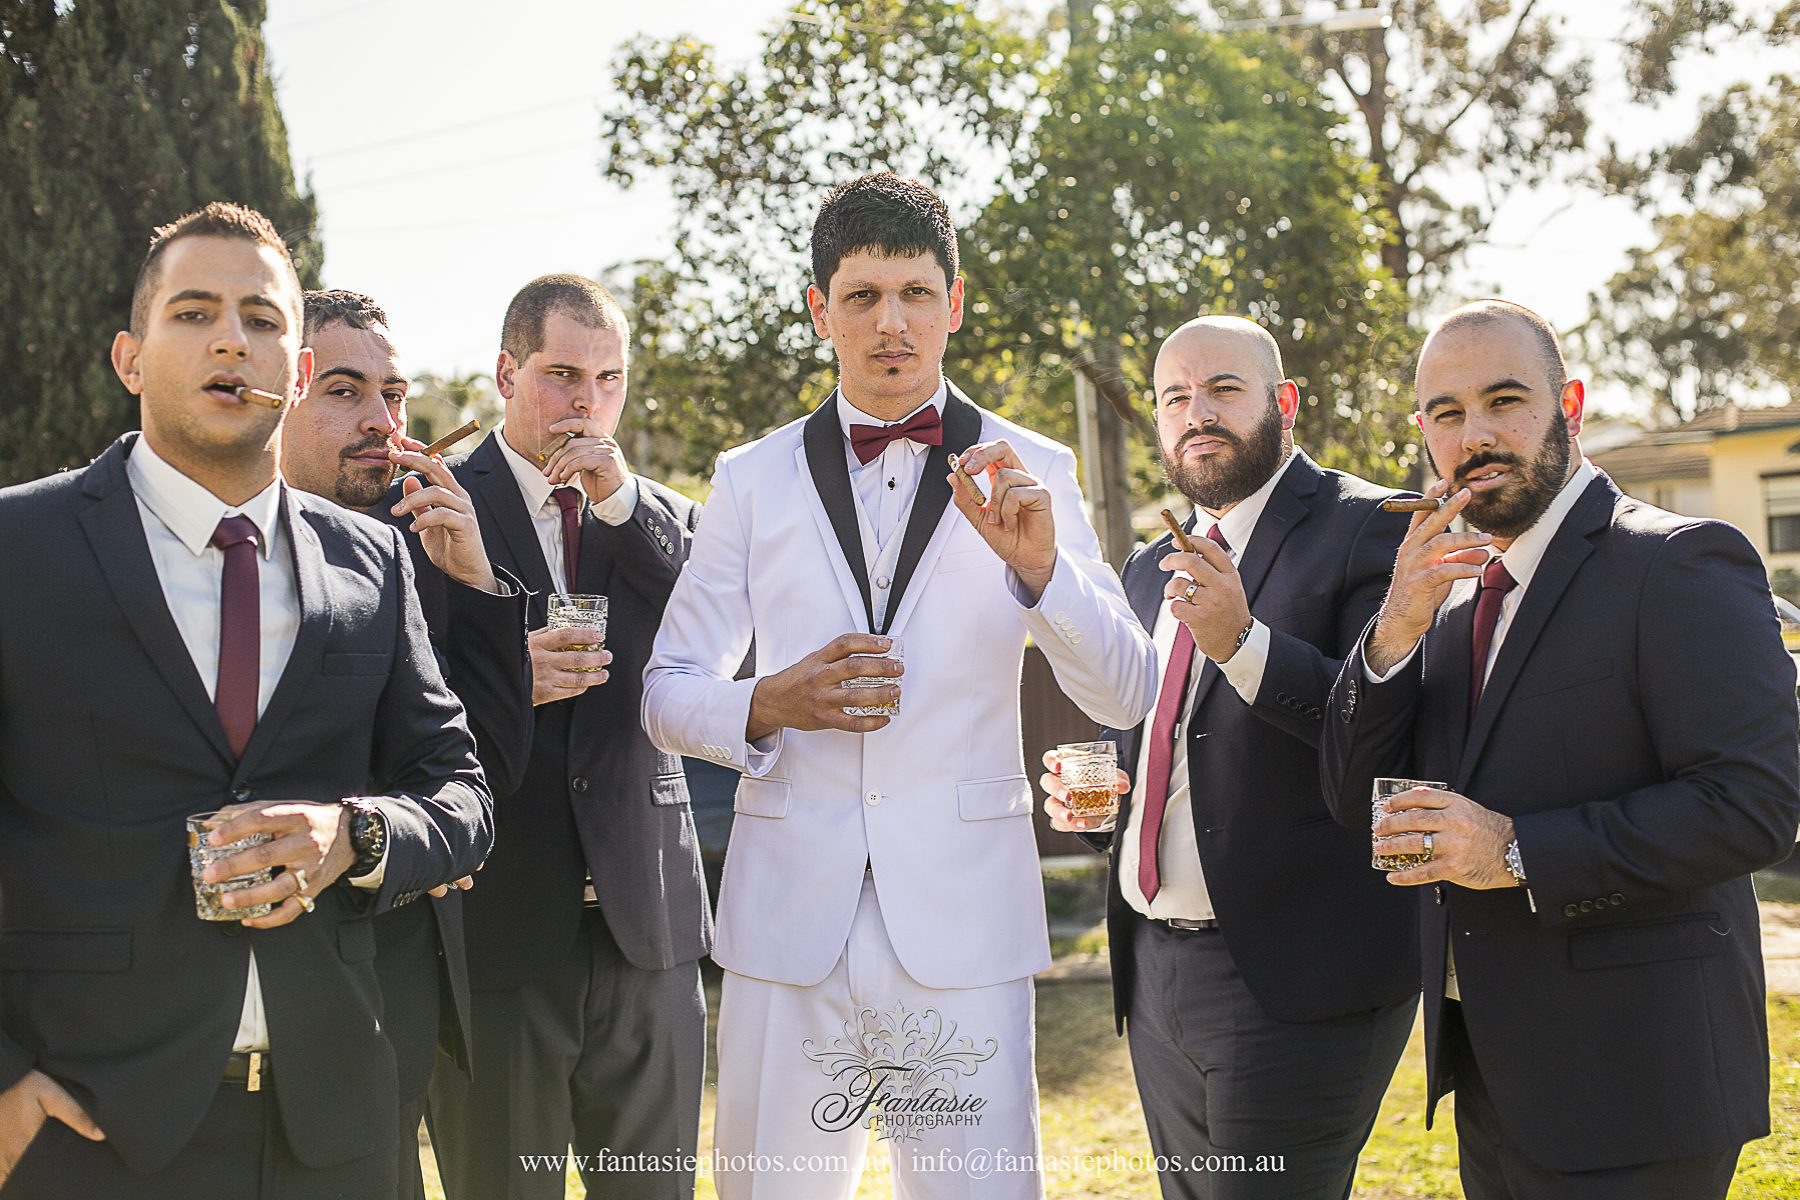 Wedding Photography | Grooms & Groomsmen Lighting up their cigars | Fantasie Photography